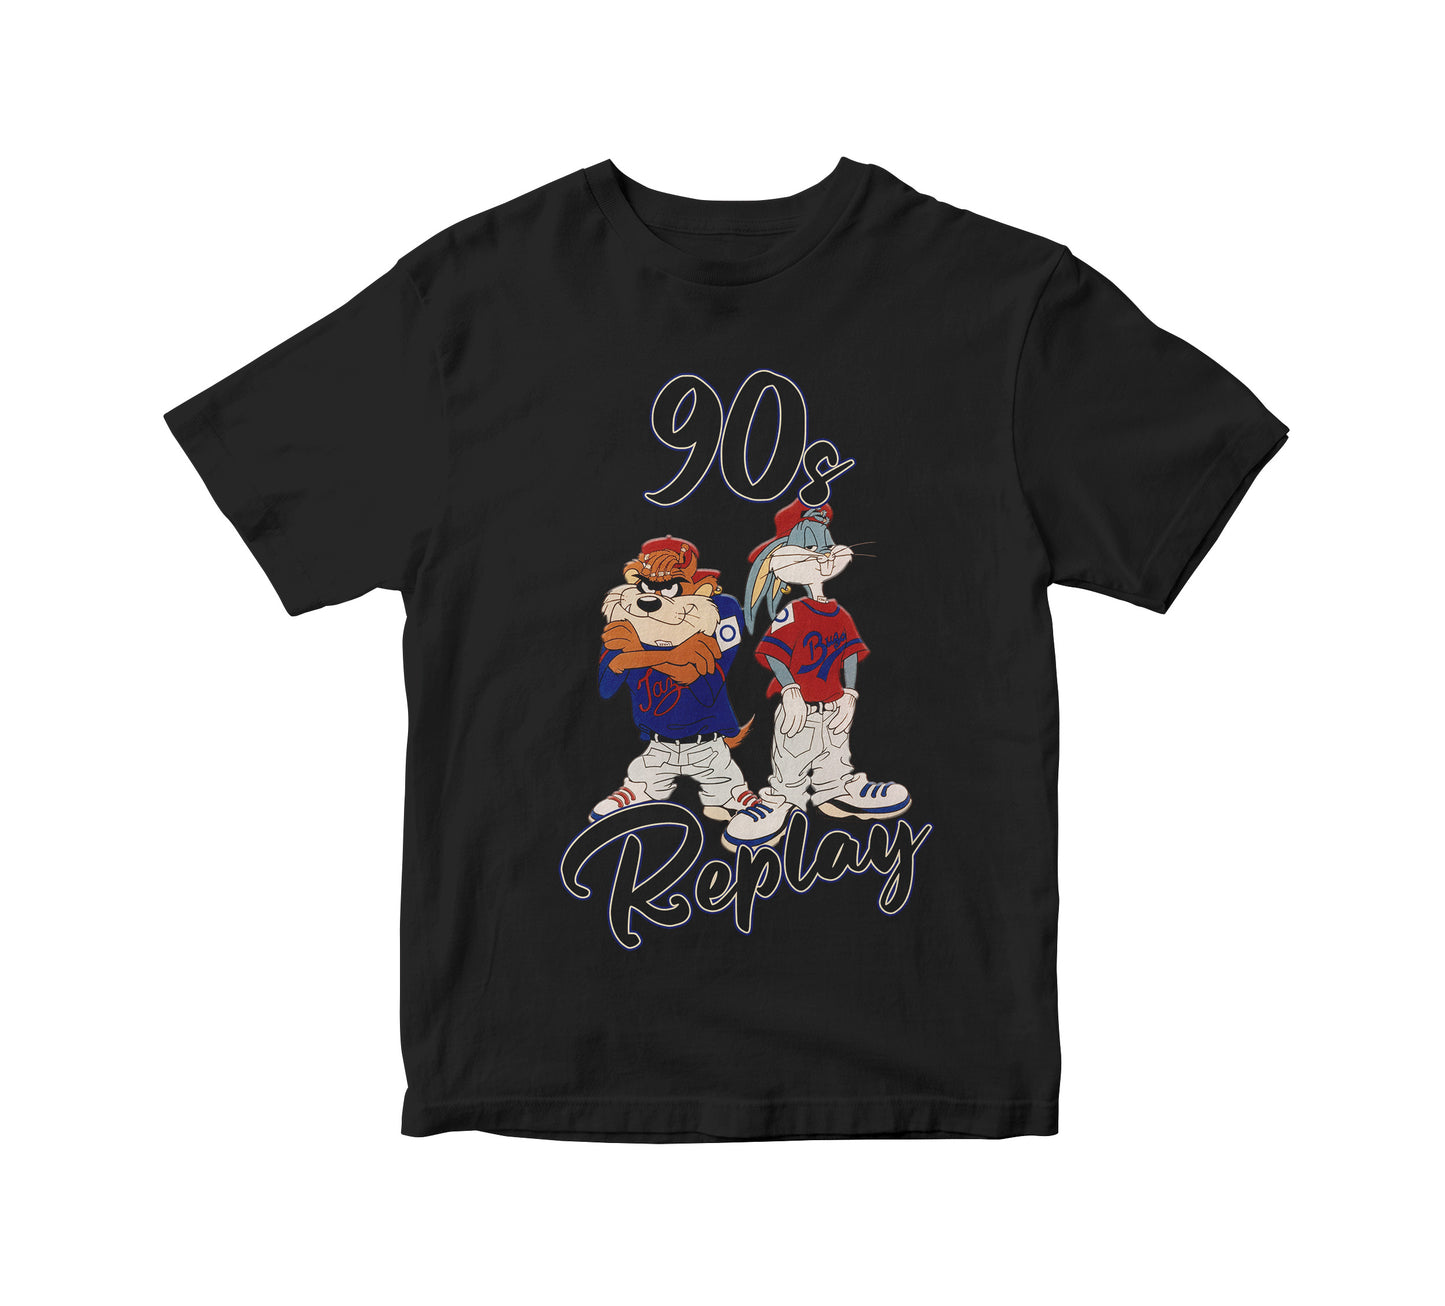 90s Replay Retro Adult Unisex T-Shirt